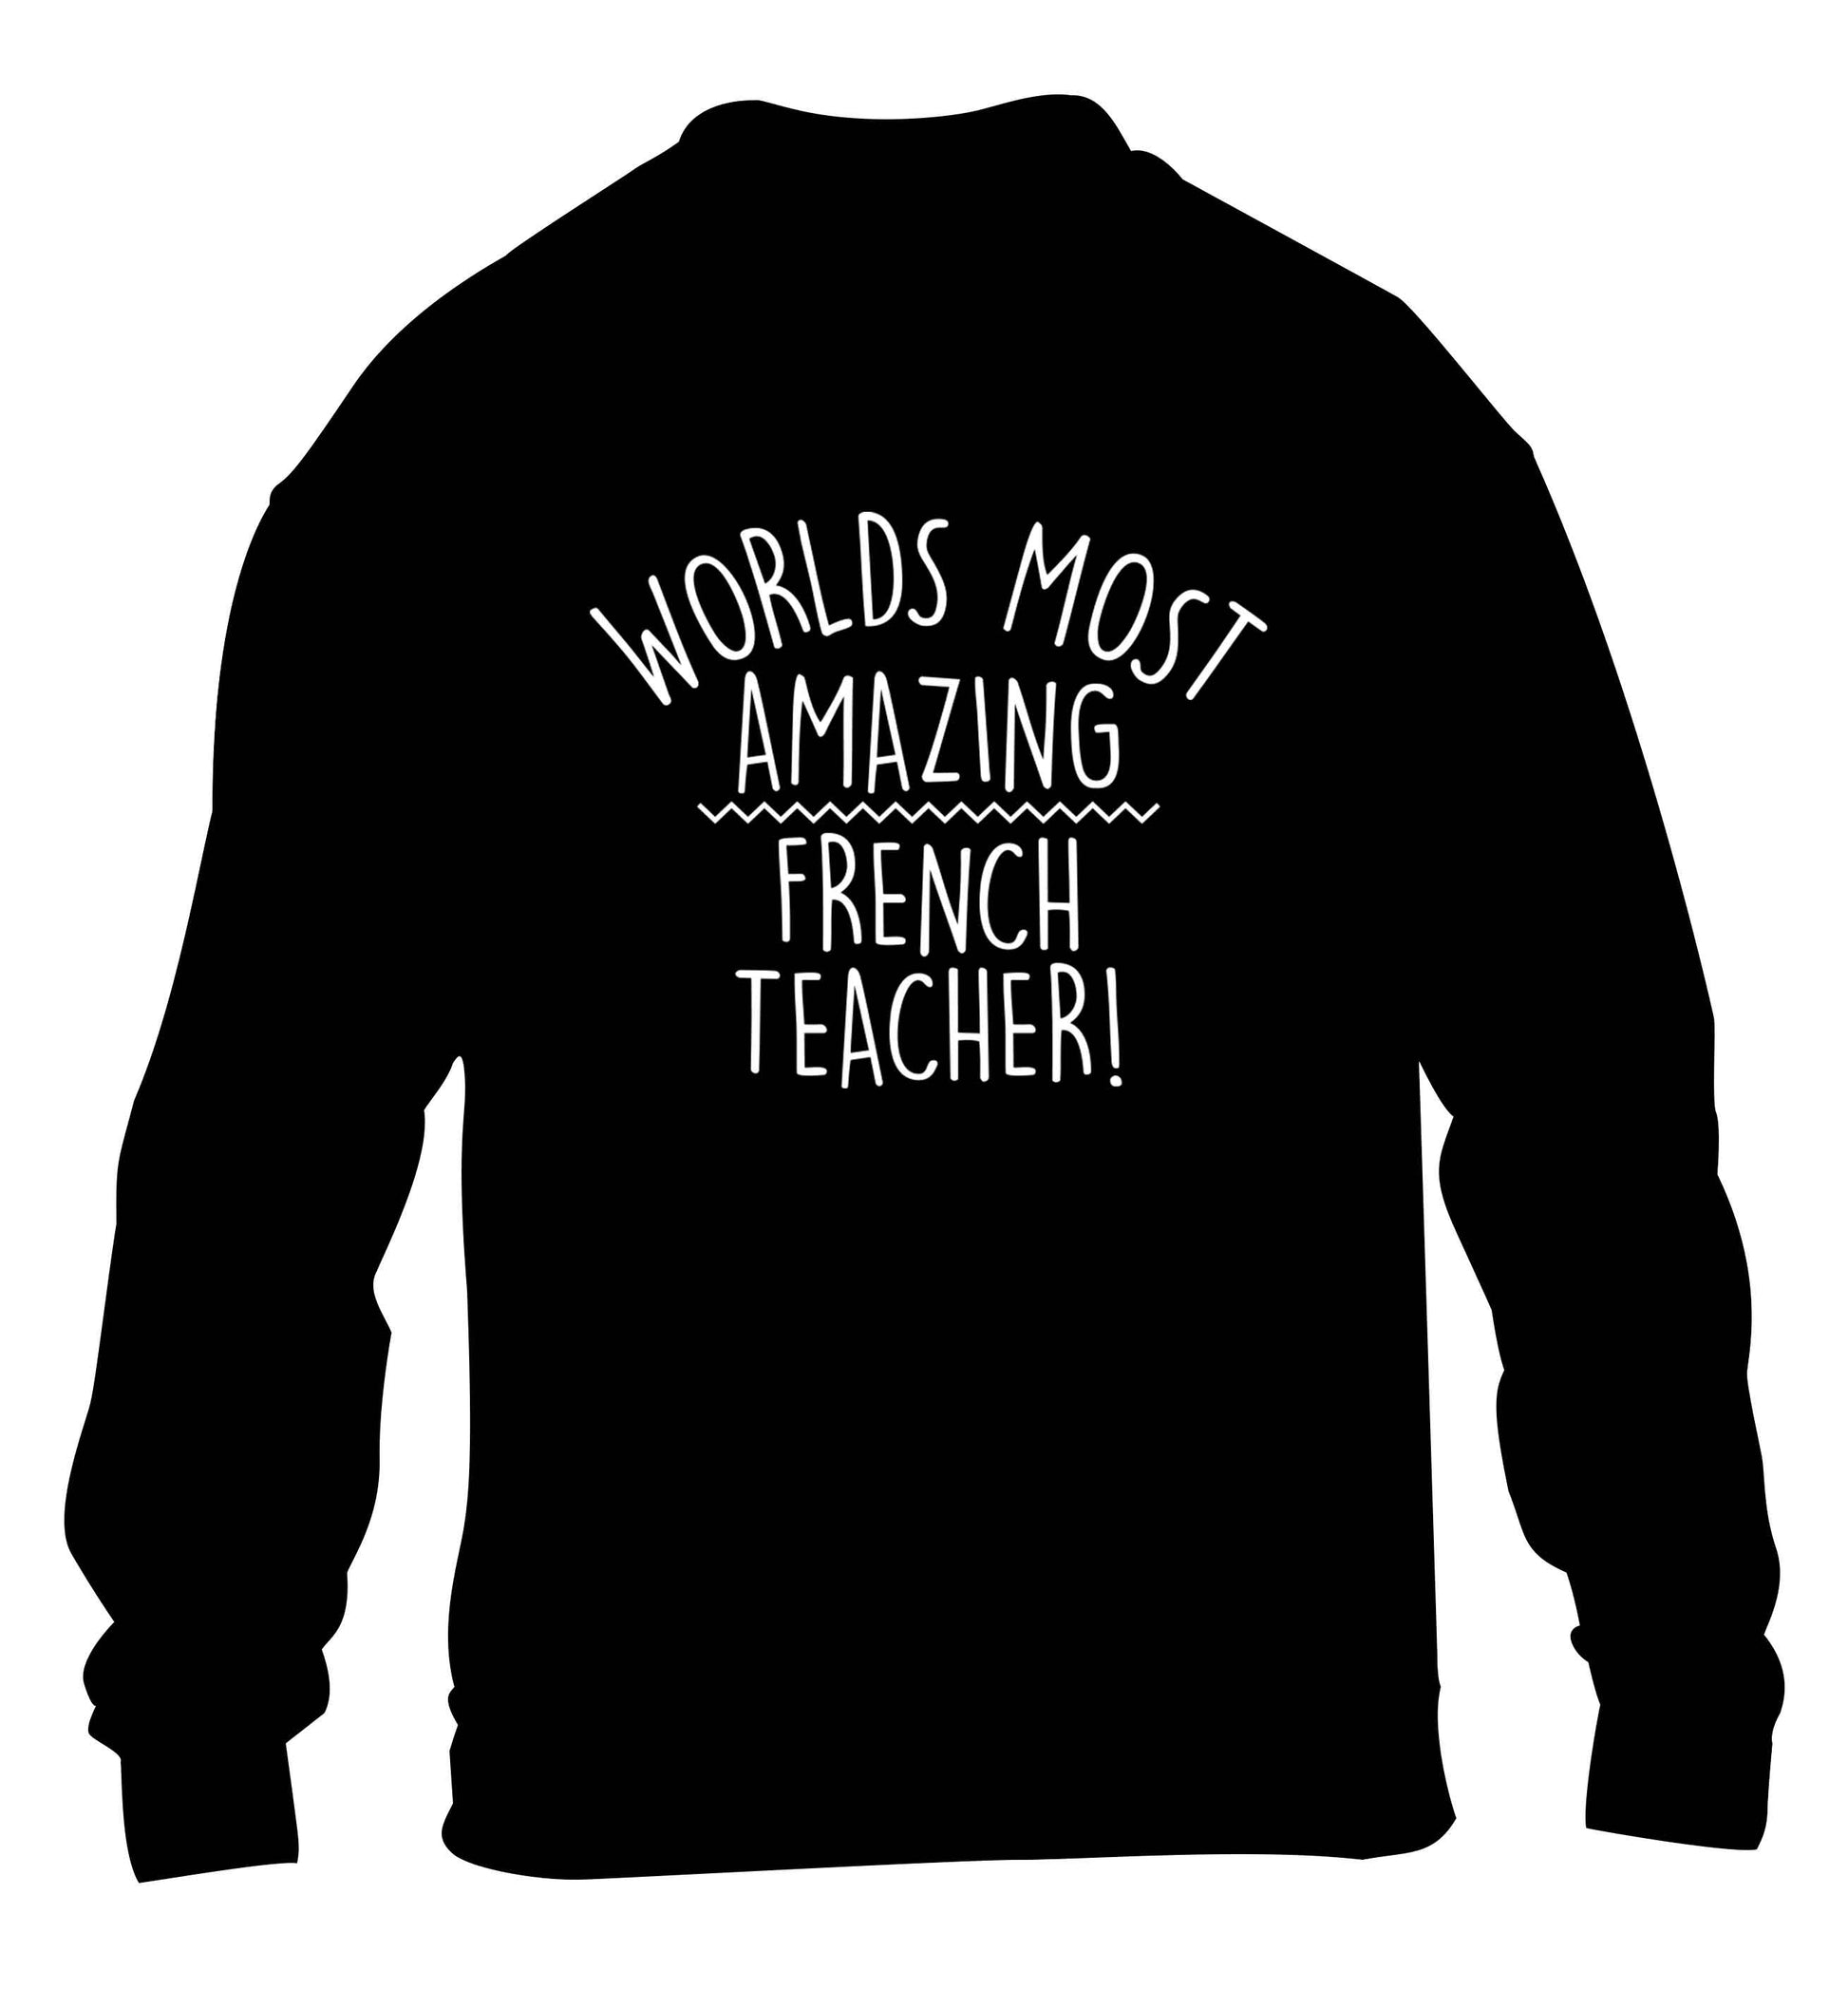 Worlds most amazing French teacher children's black sweater 12-13 Years